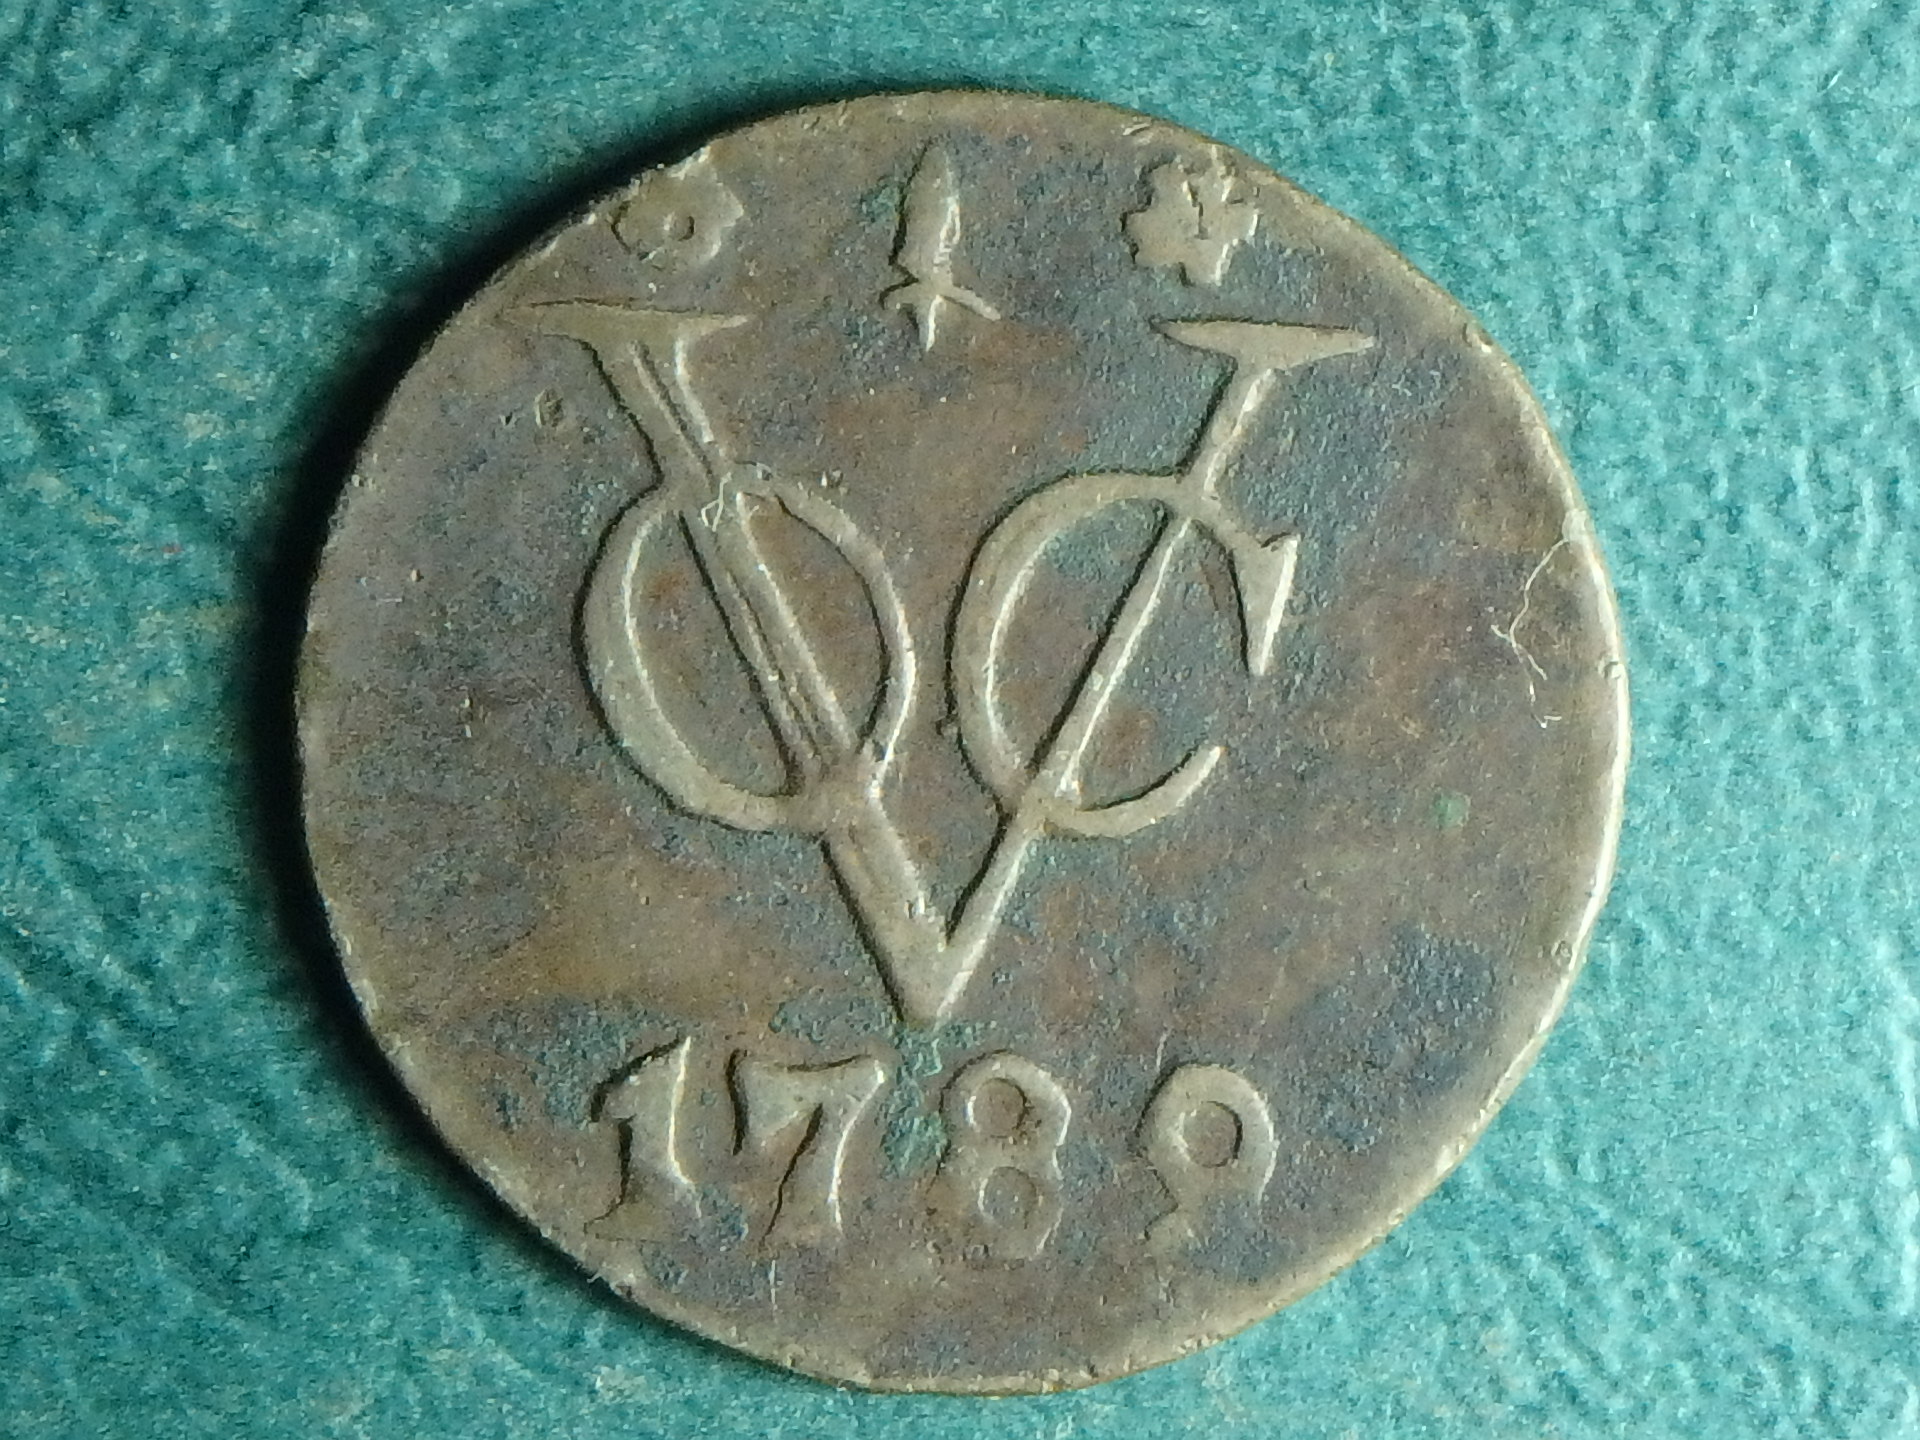 1789 G VOC 1 d rev.JPG